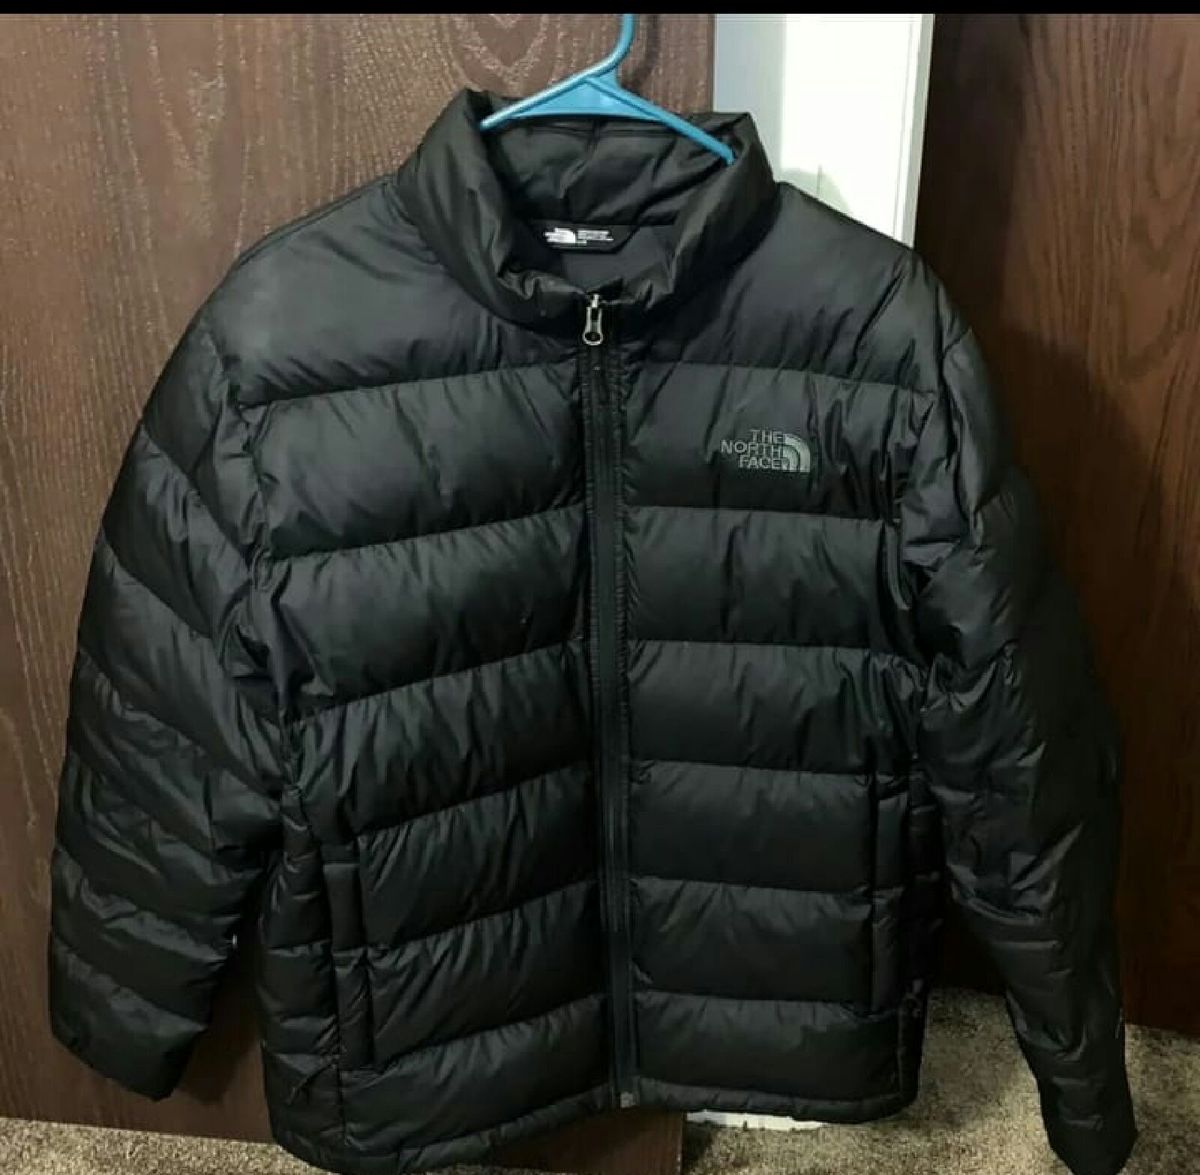 jaqueta masculina tamanho g5